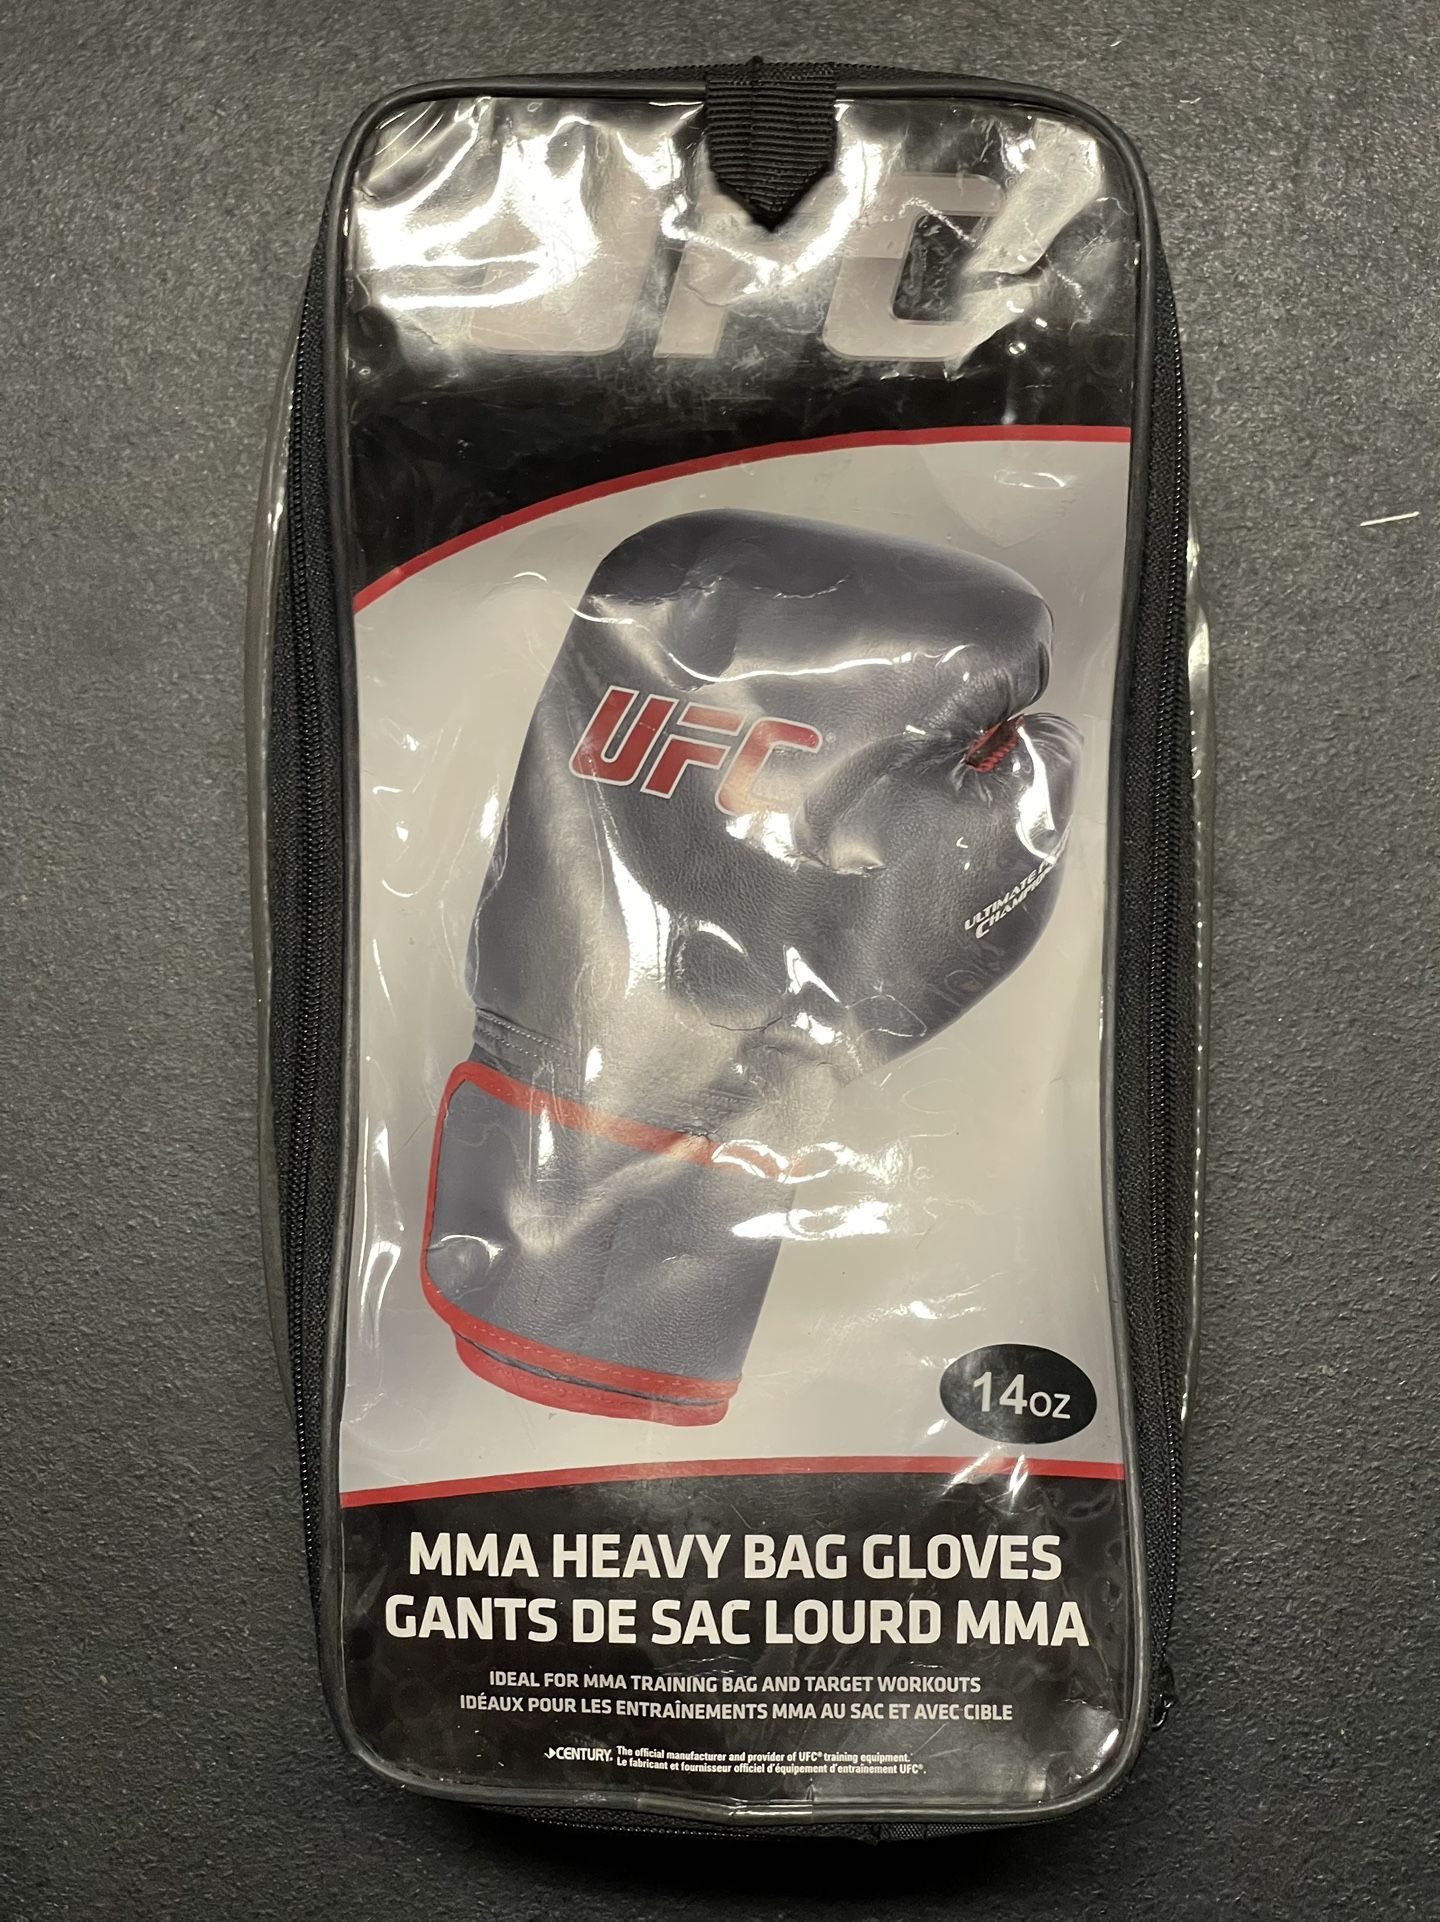 UFC 14oz heavy Bag MMA gloves Brand New Unopened Boxing Gloves